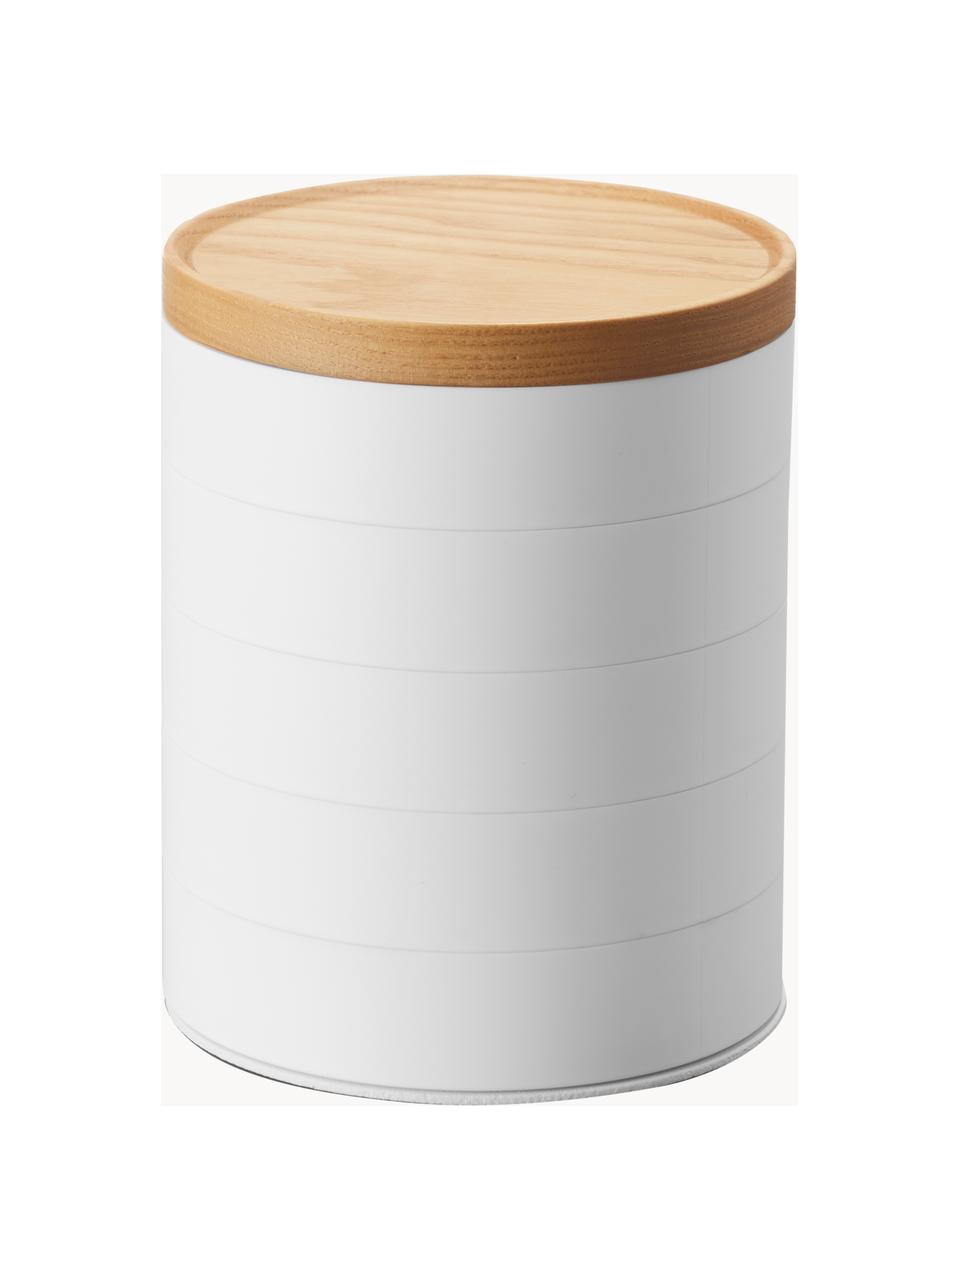 Schmuckkästchen Tosca mit Holz-Deckel, 5-stufig, Deckel: Holz, Weiß, Holz, Ø 10 x H 13 cm